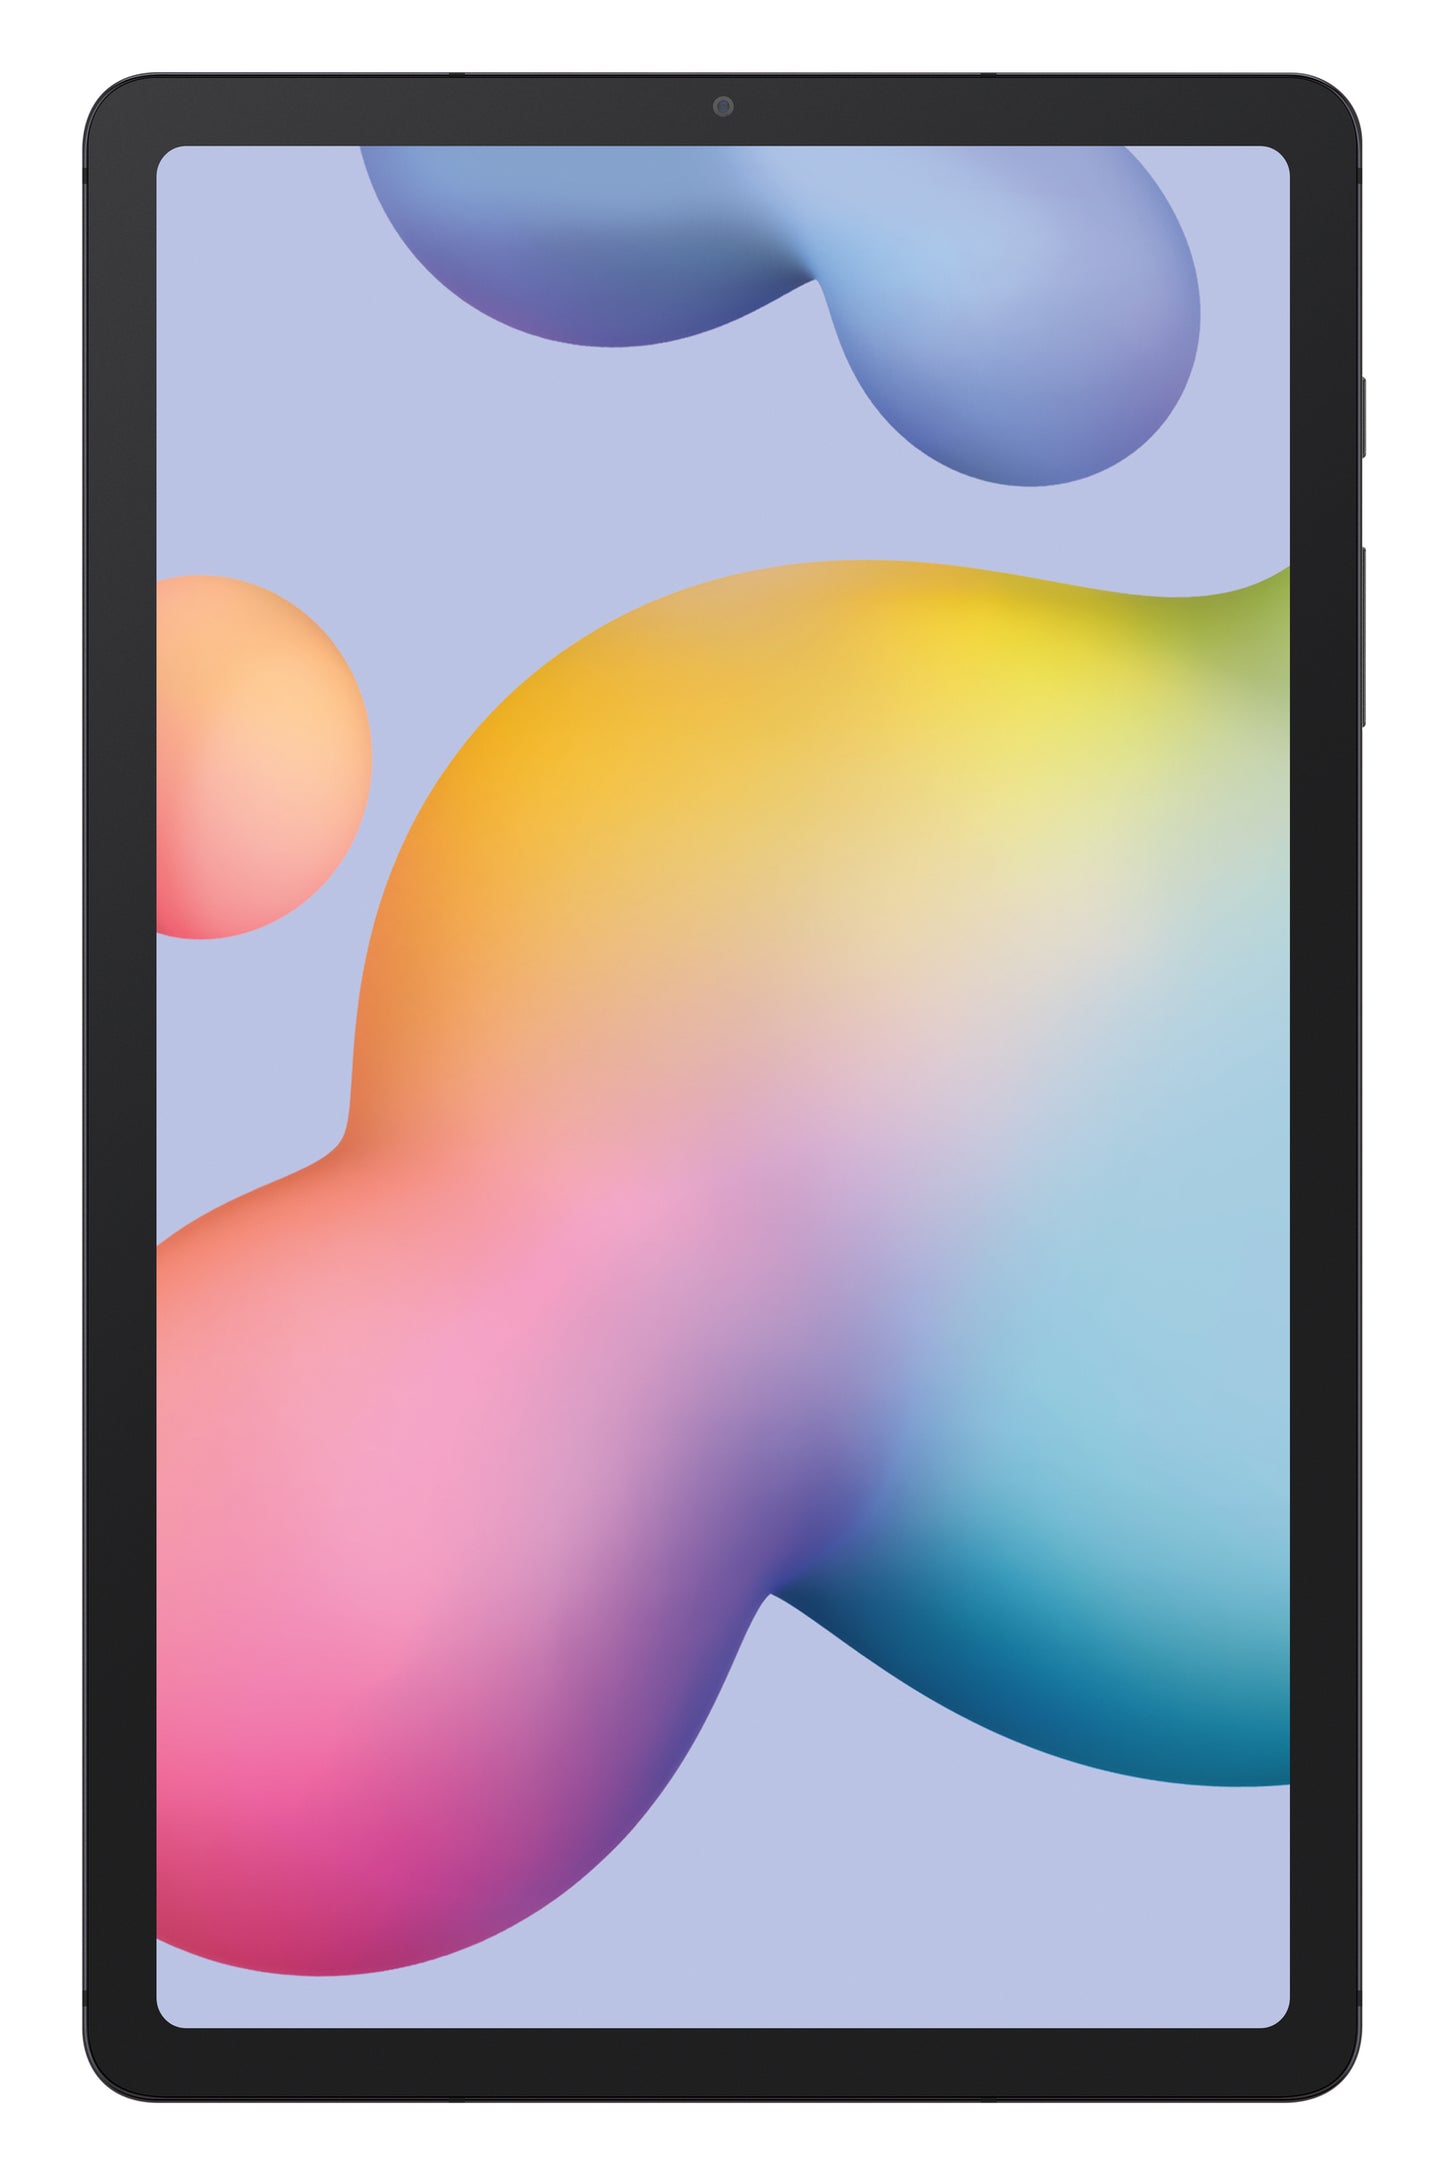 Samsung Galaxy Tab S6 Lite Wi-Fi 64GB 10.4-in Tablet - Oxford Gray